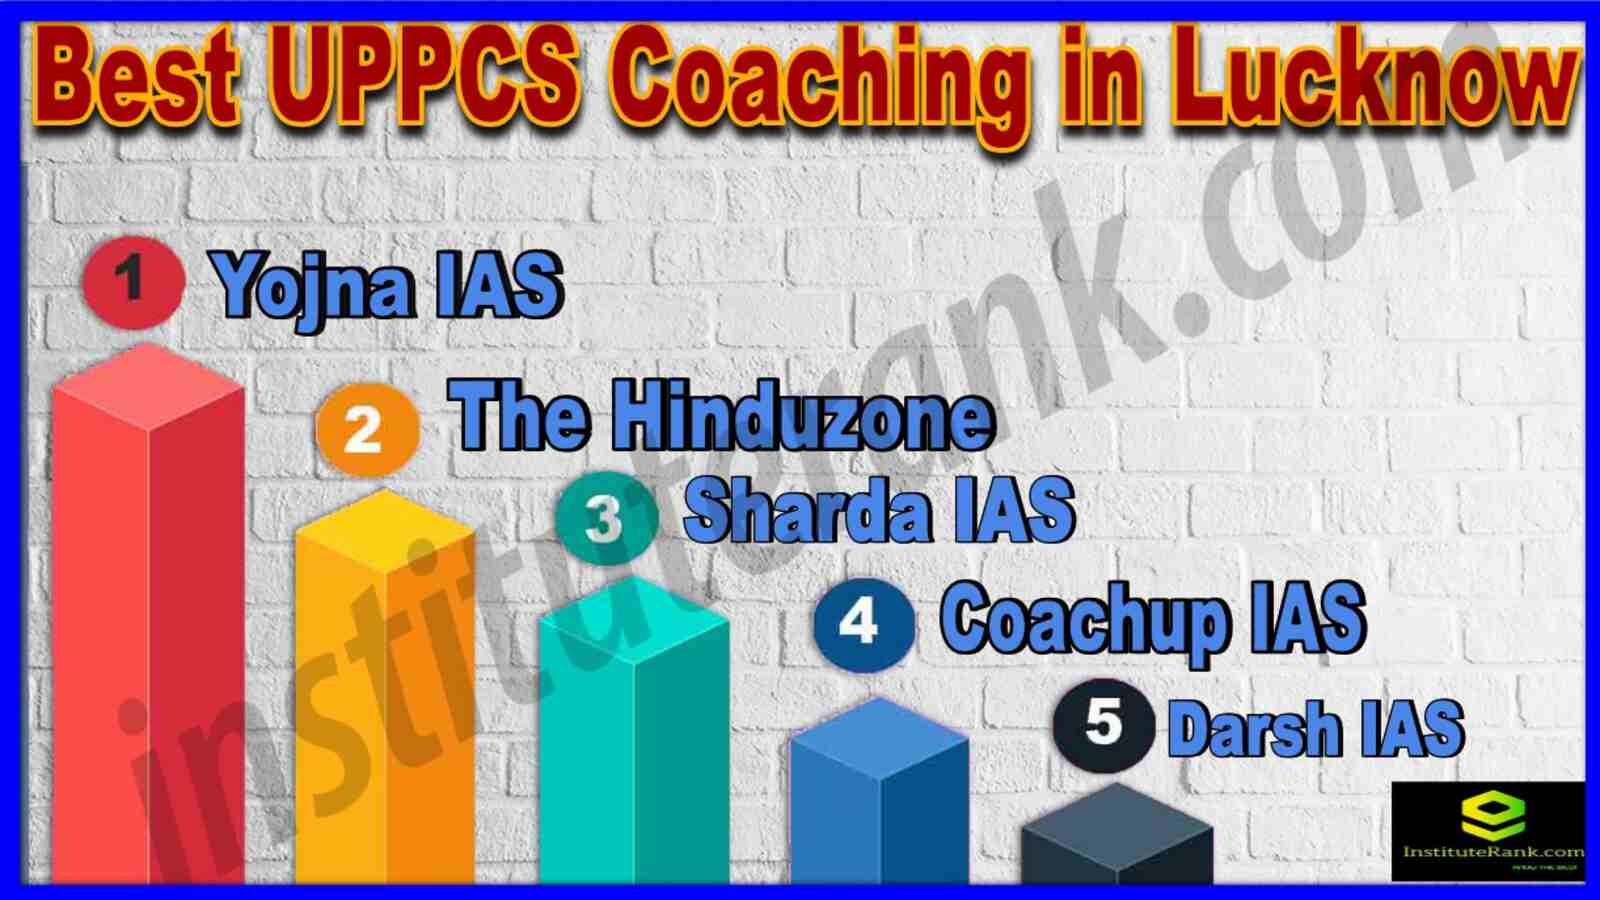 Best UPPCS Coaching in Lucknow